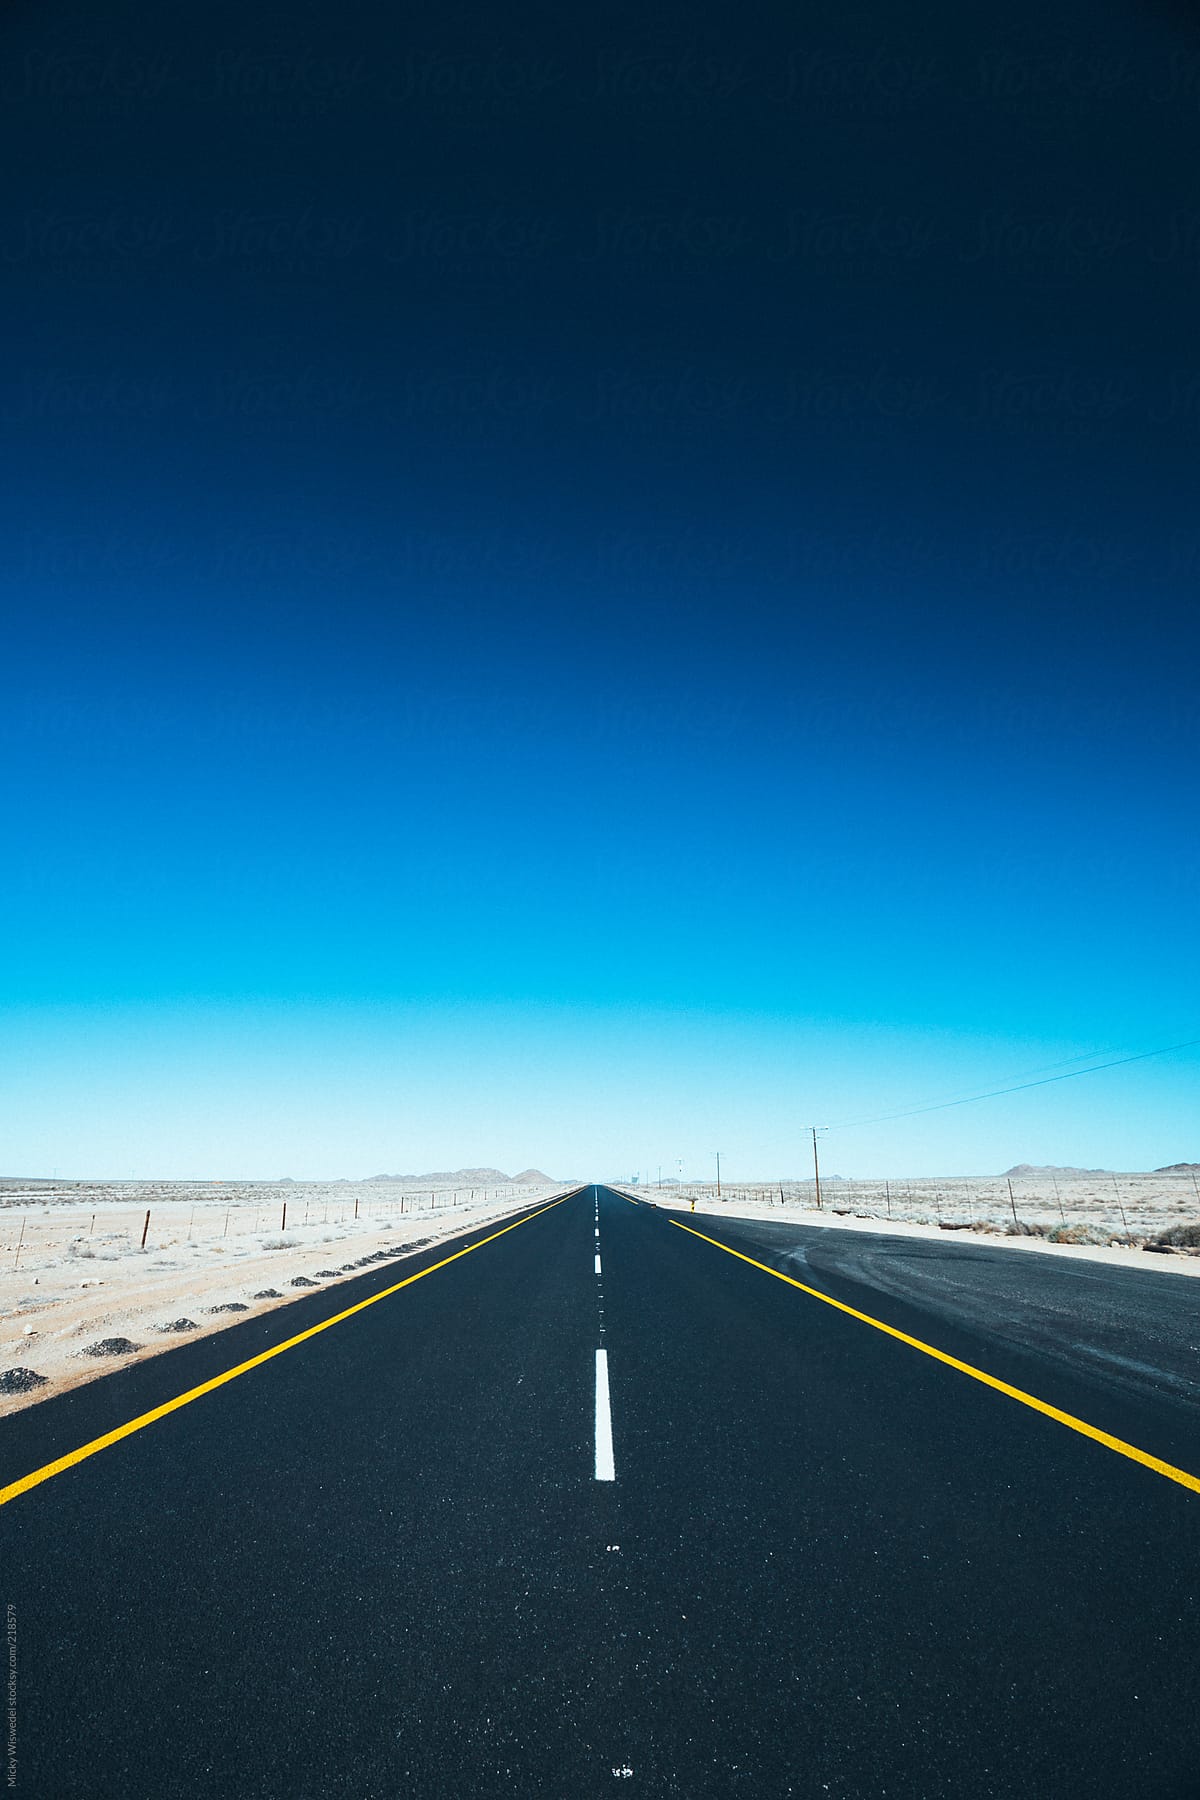 Long Open Road Through The Desert By Stocksy Contributor Juno Stocksy